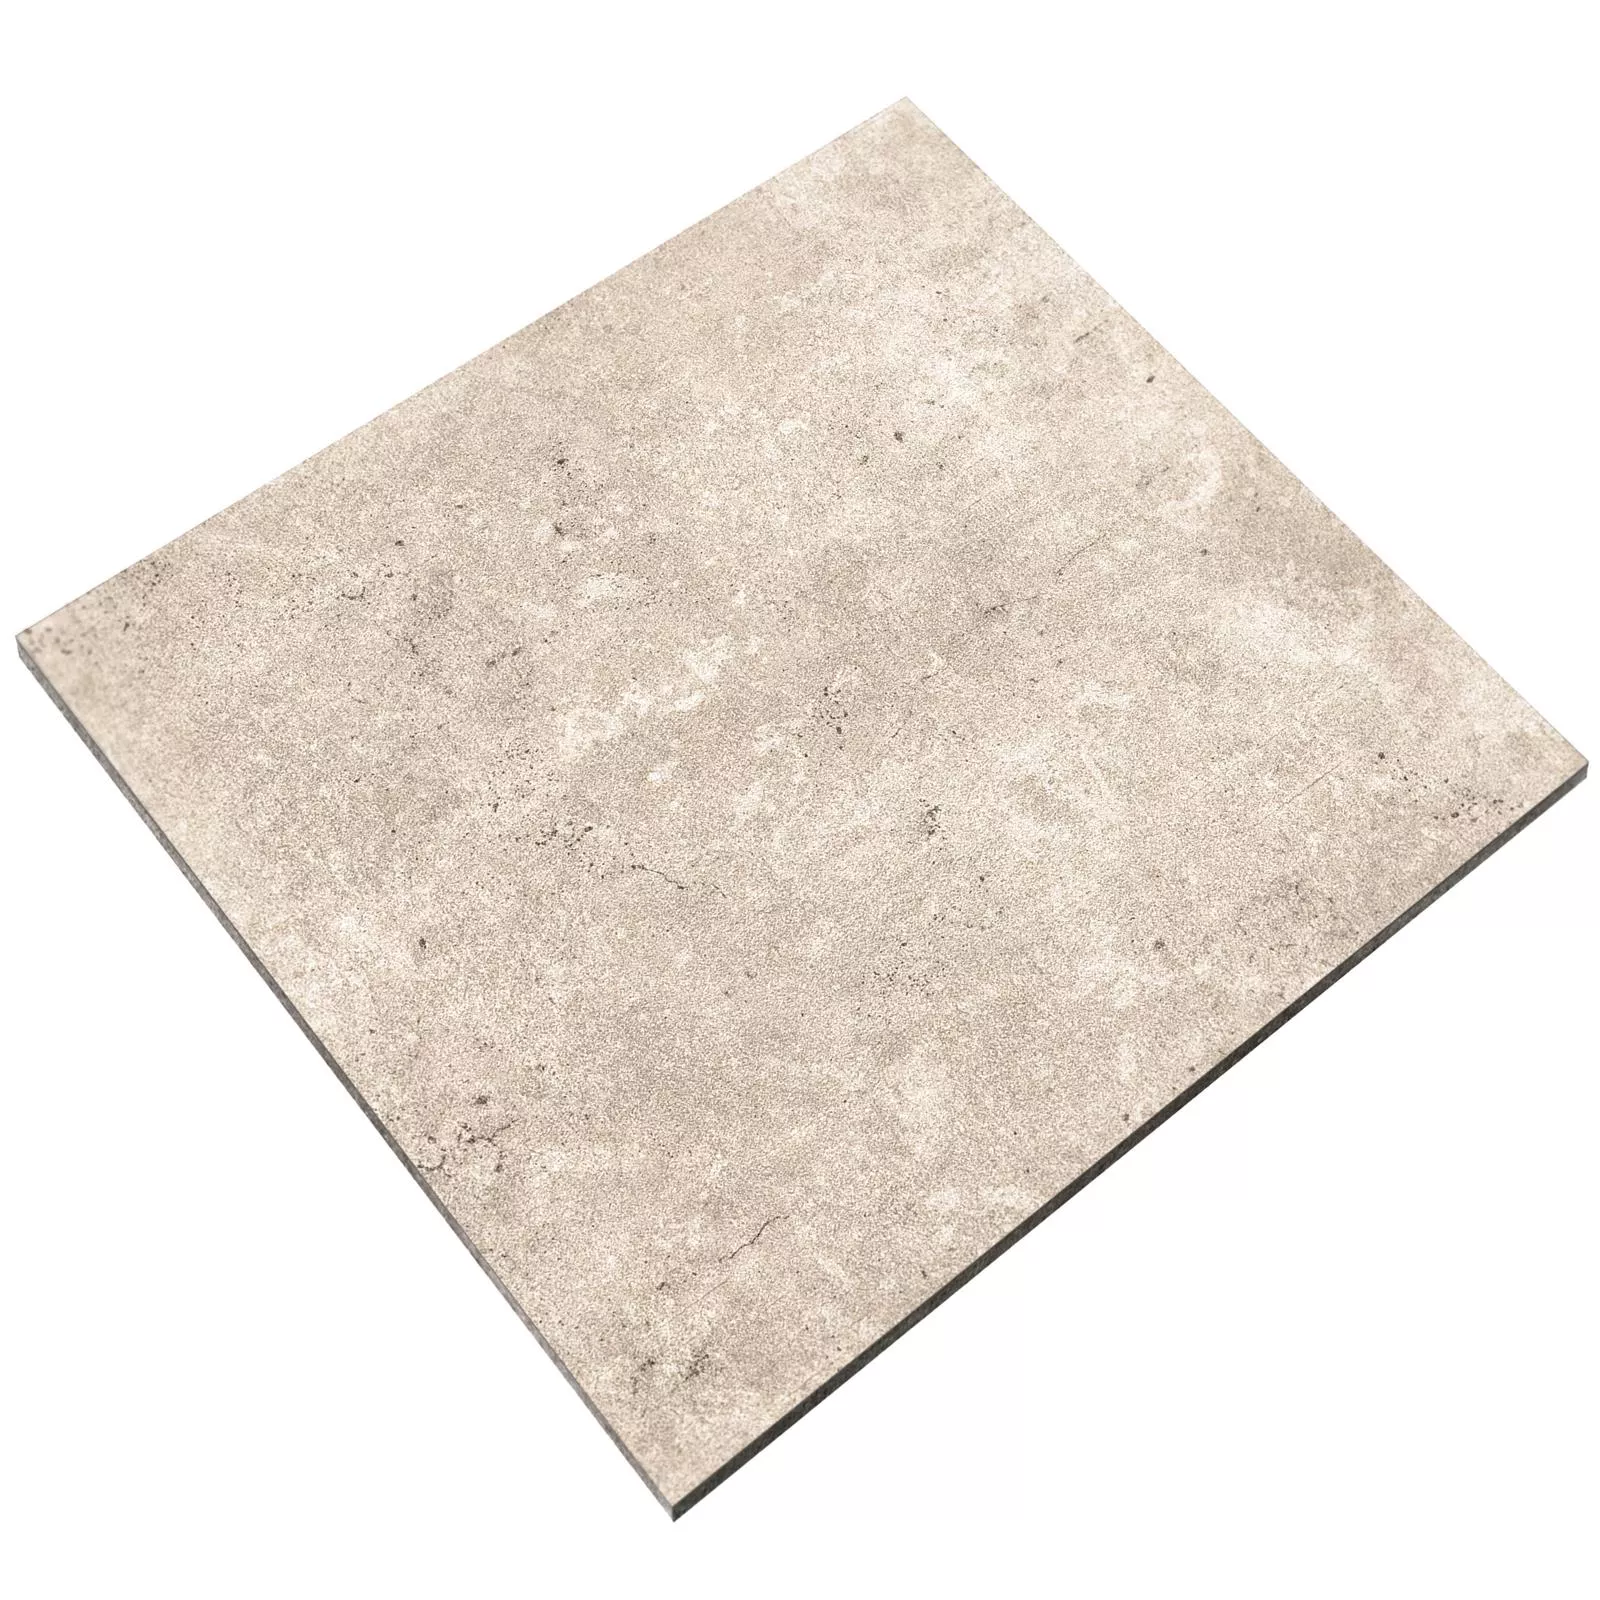 Sample Floor Tiles Jamaica Beton Optic Sand 60x60cm